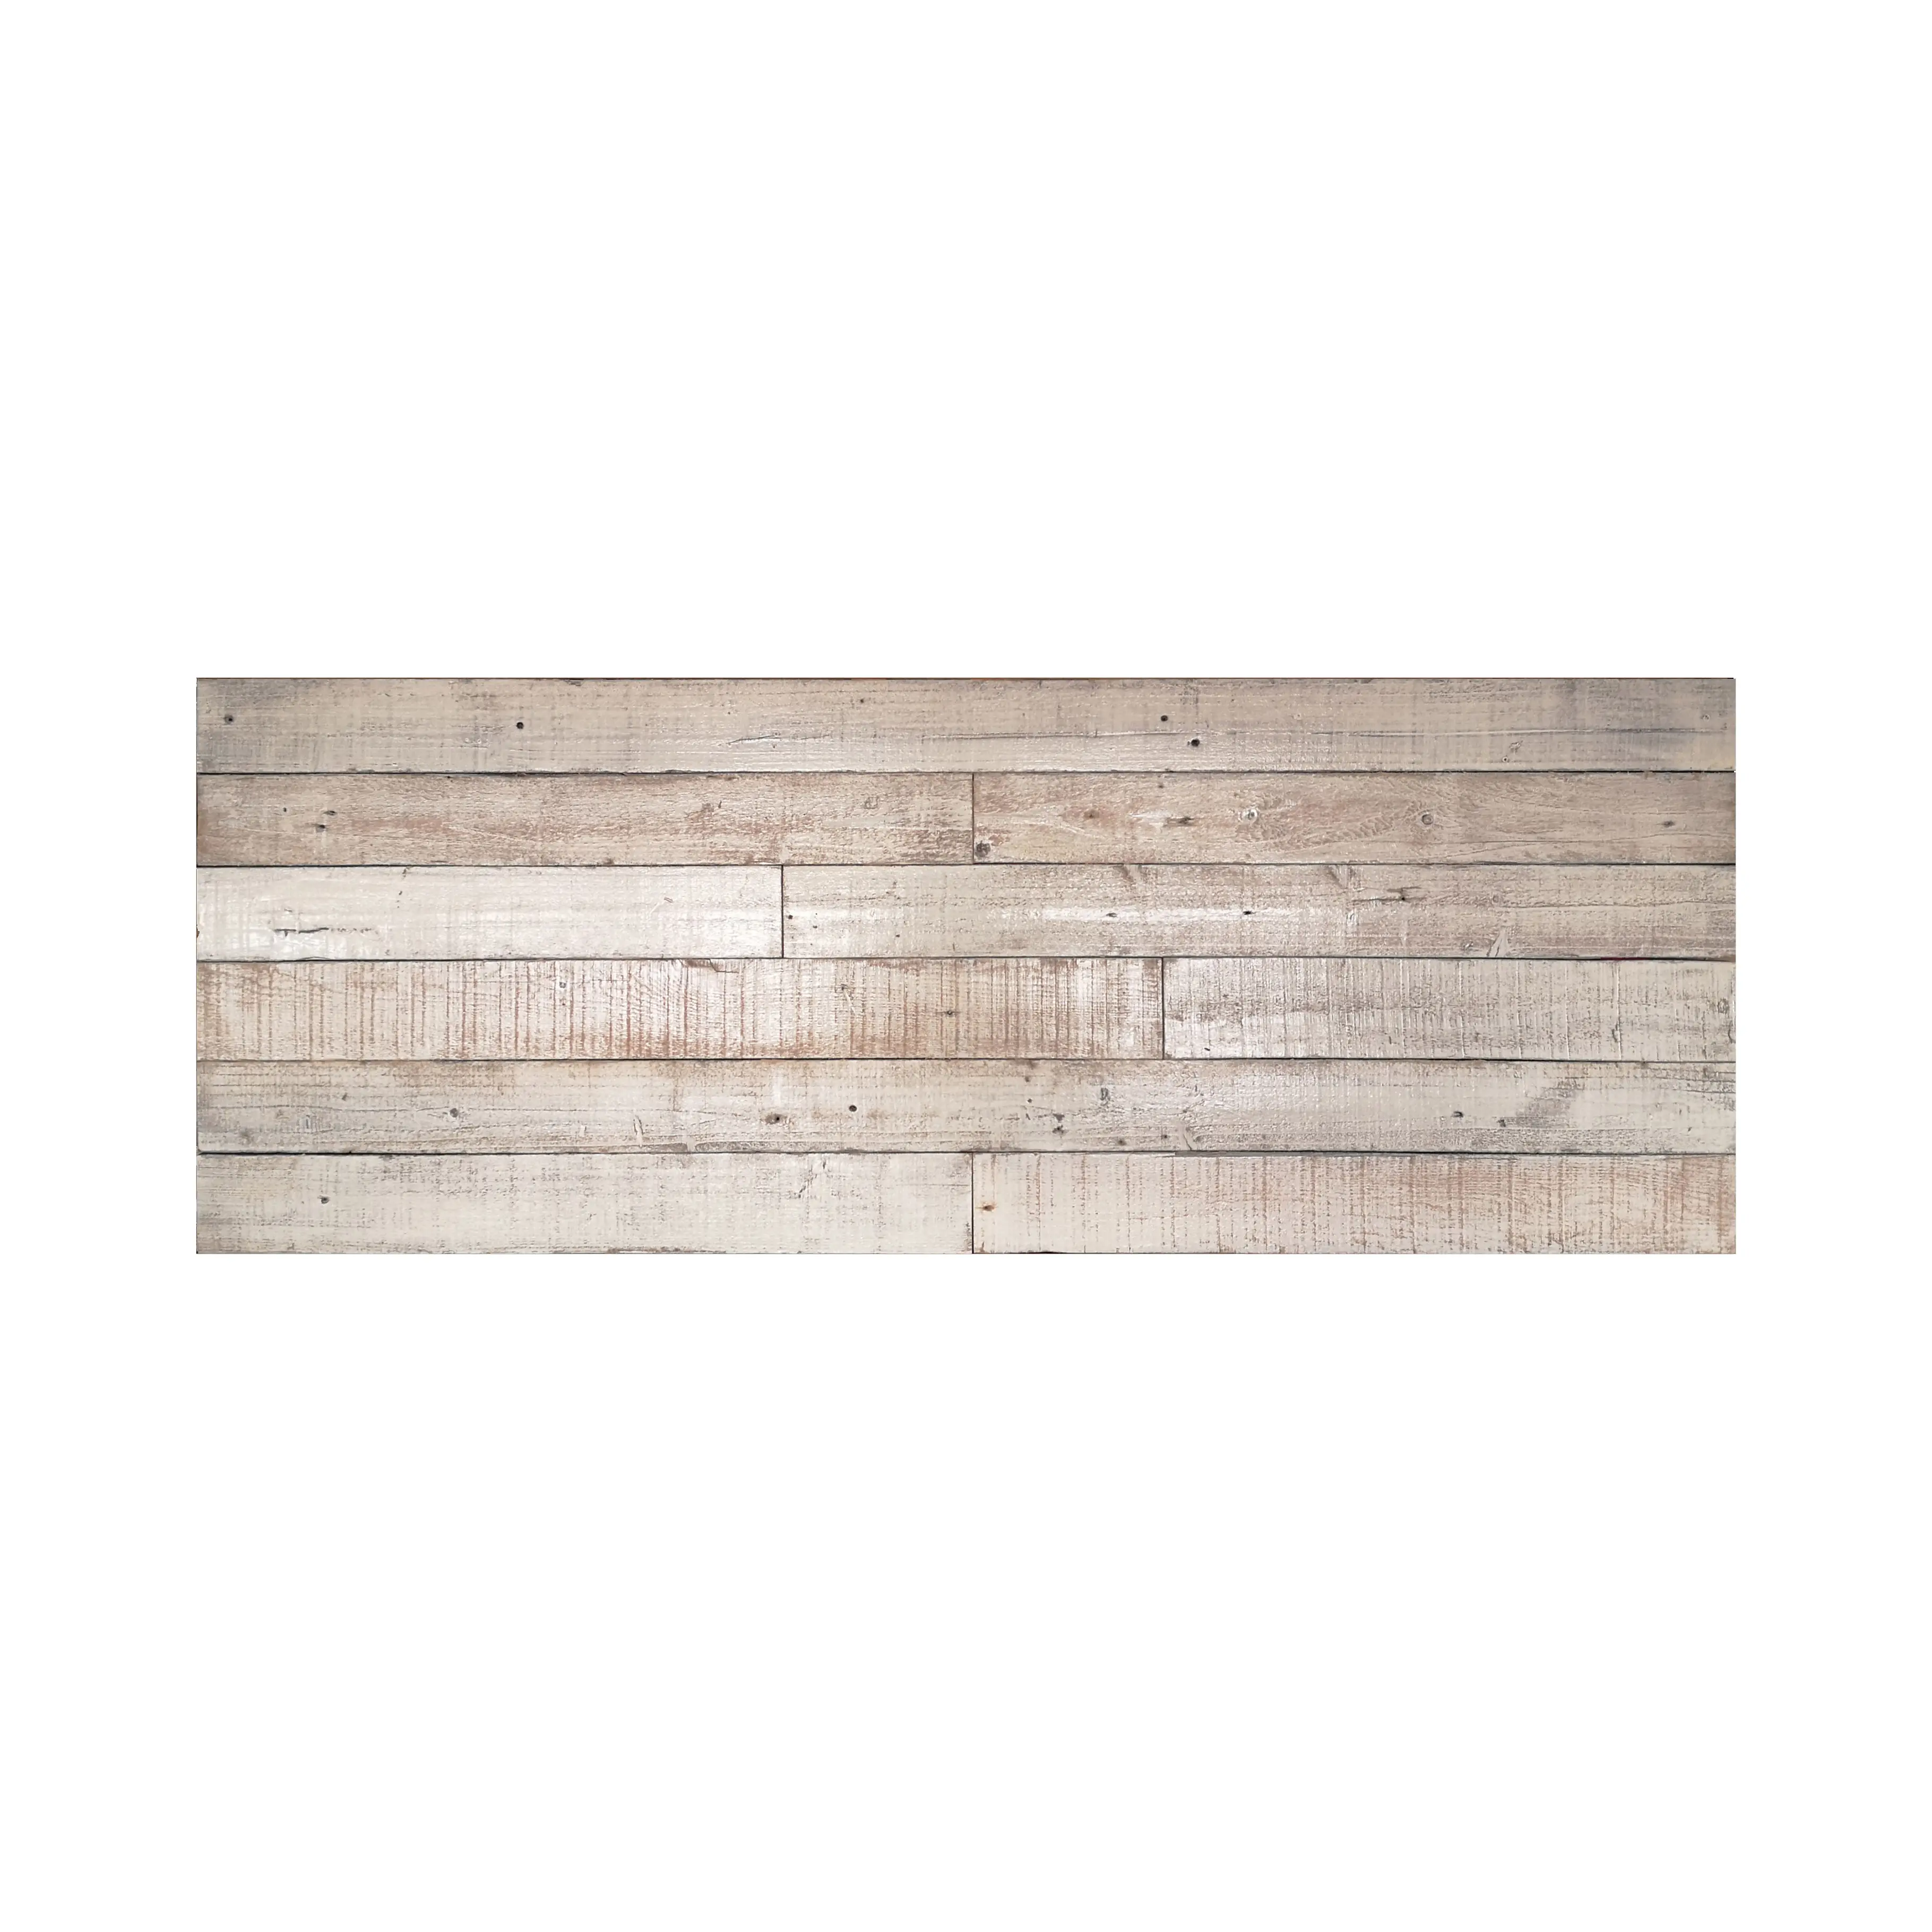 Panel de madera vieja, retro, reciclada